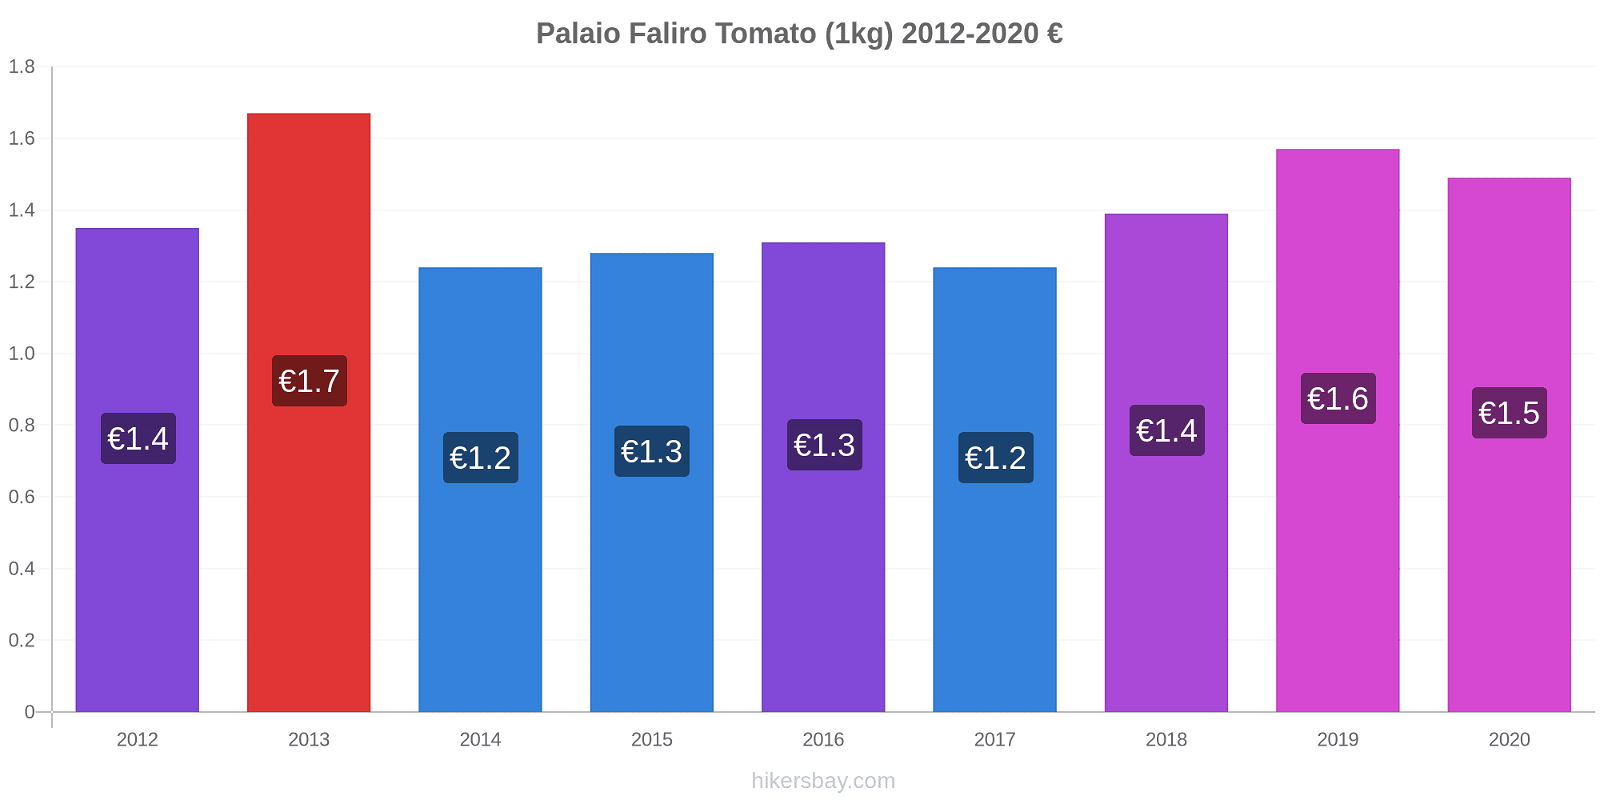 Palaio Faliro price changes Tomato (1kg) hikersbay.com